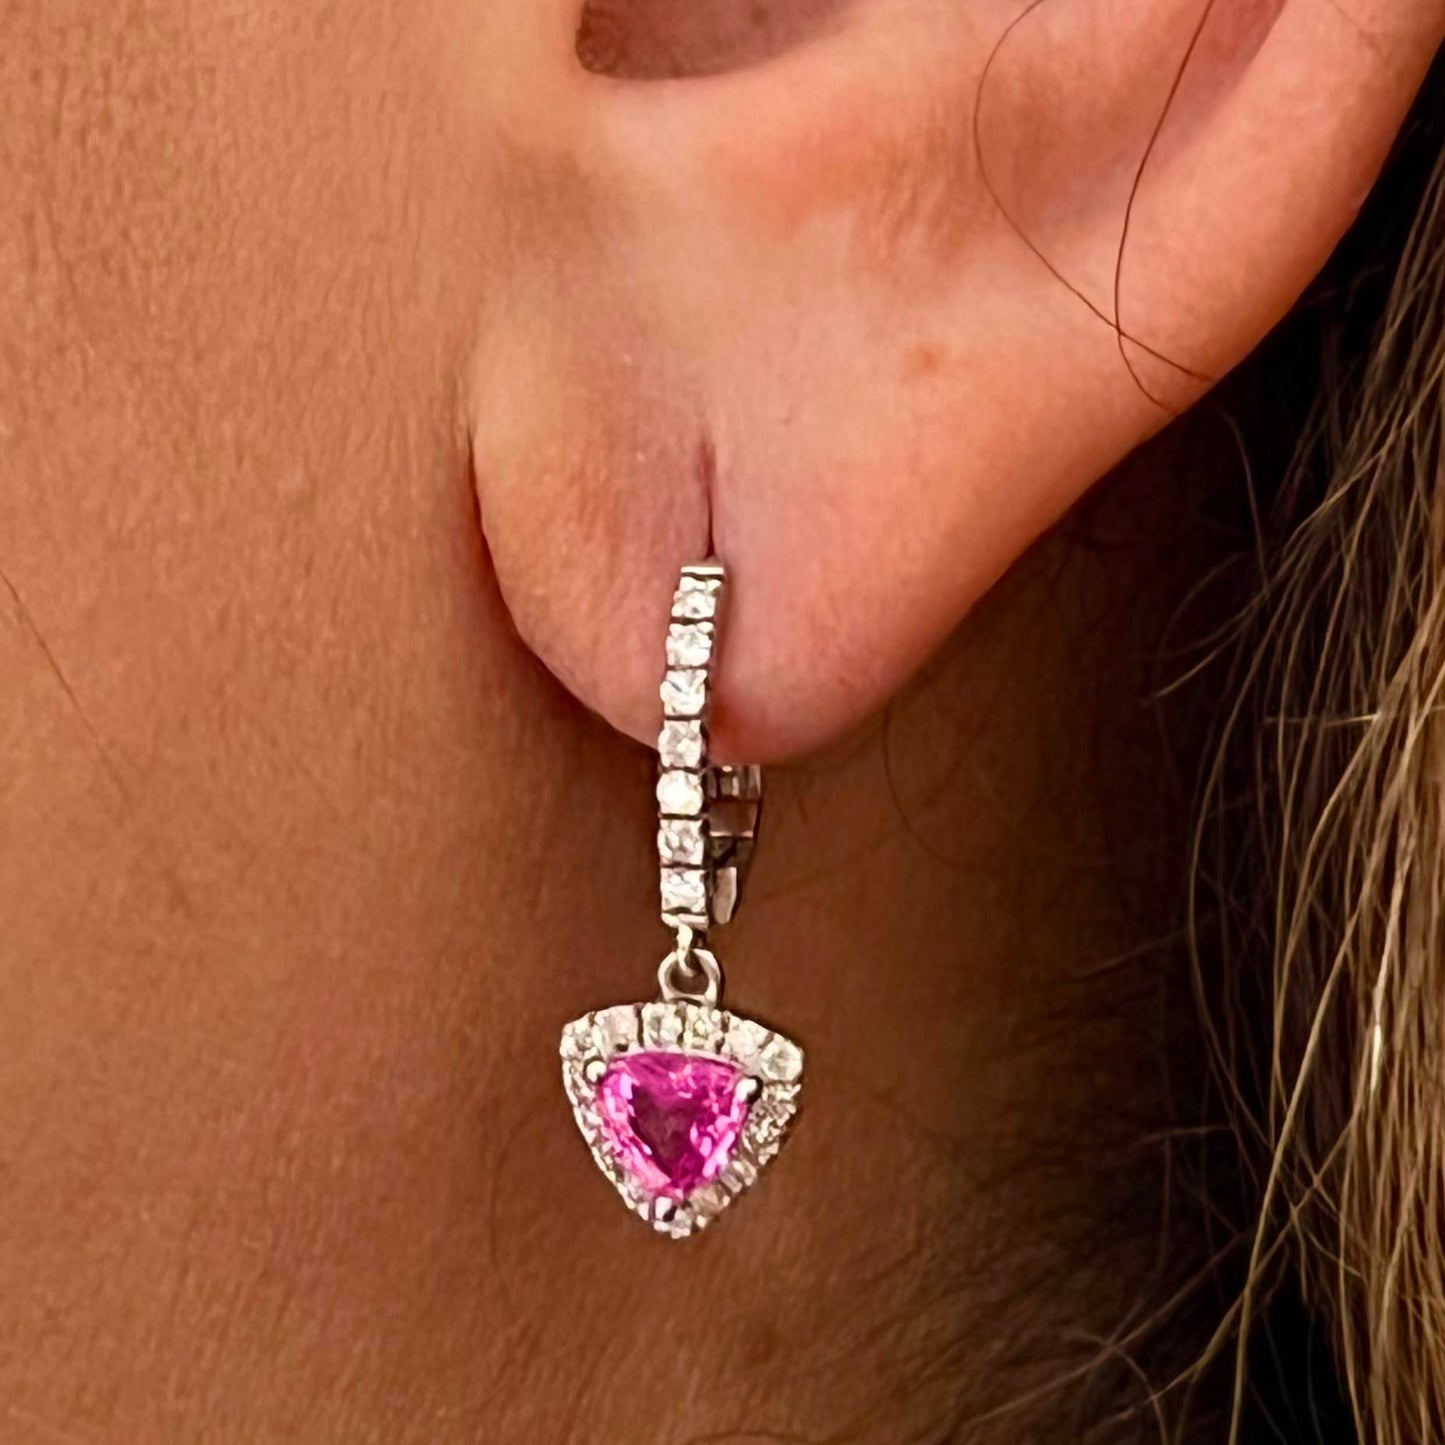 Natural Sapphire Diamond Earrings 14k W Gold 2.01 TCW Certified $1,950 307916